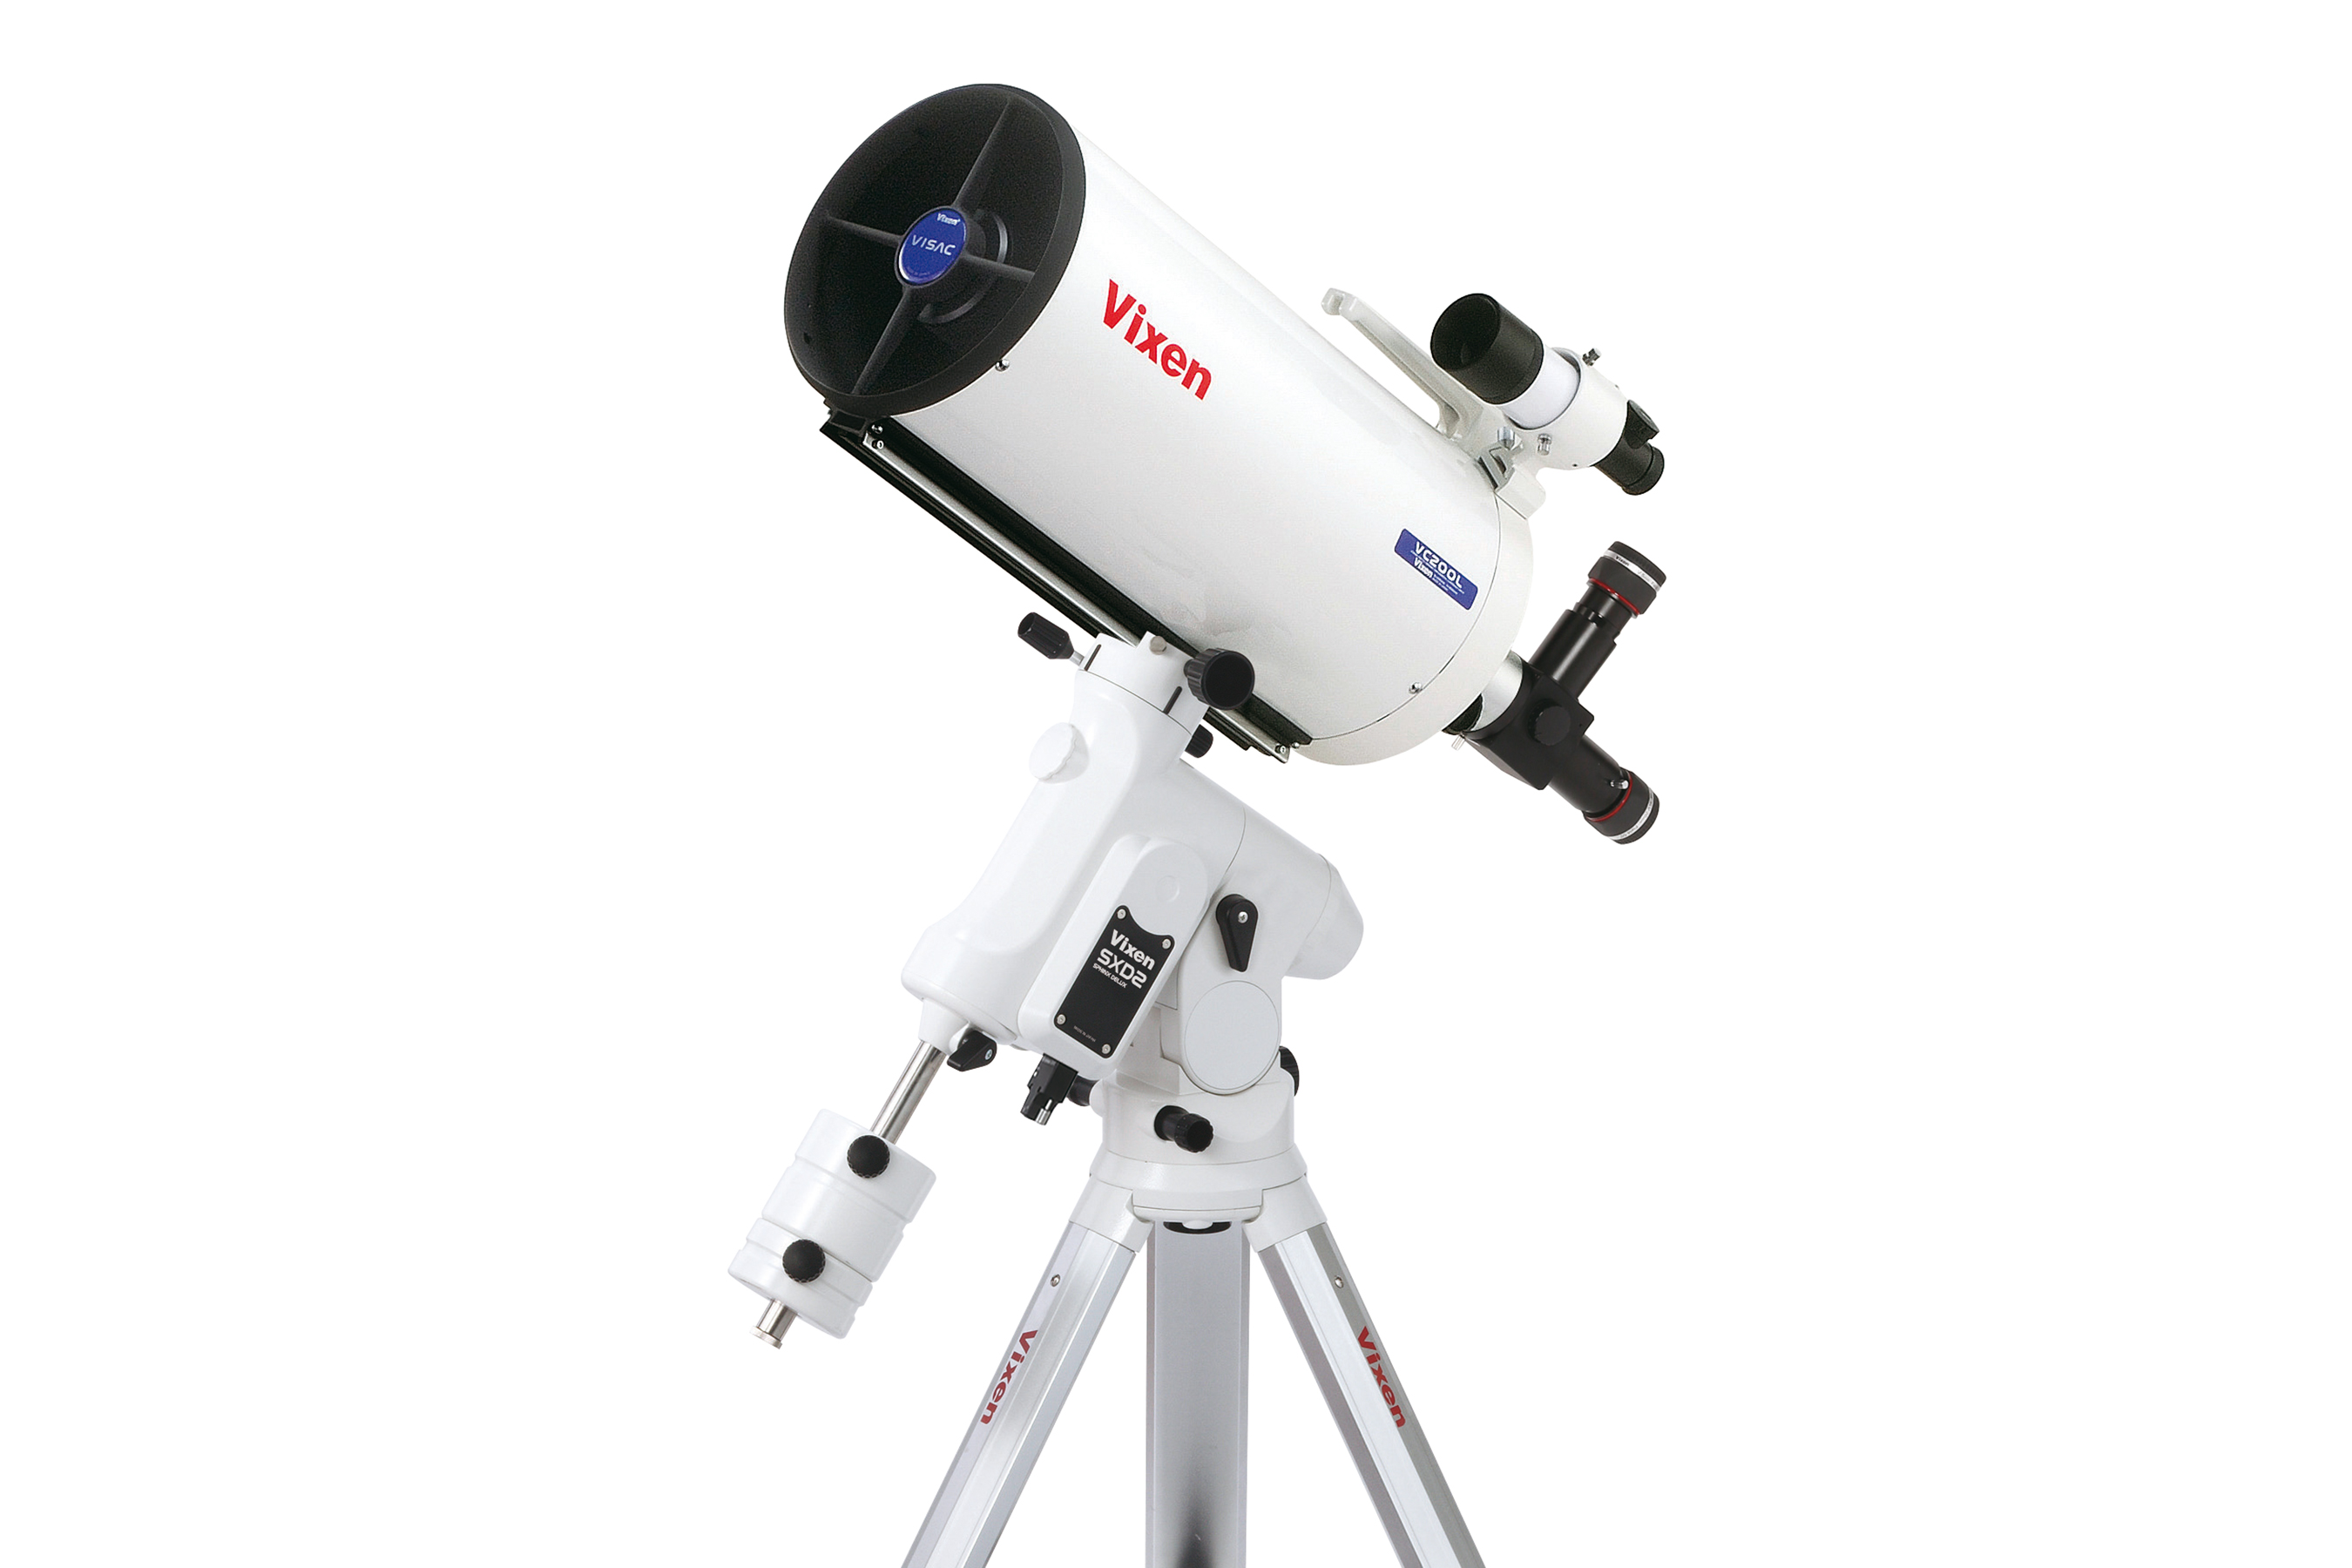 Vixen SXD2WL VC200L Telescope Set